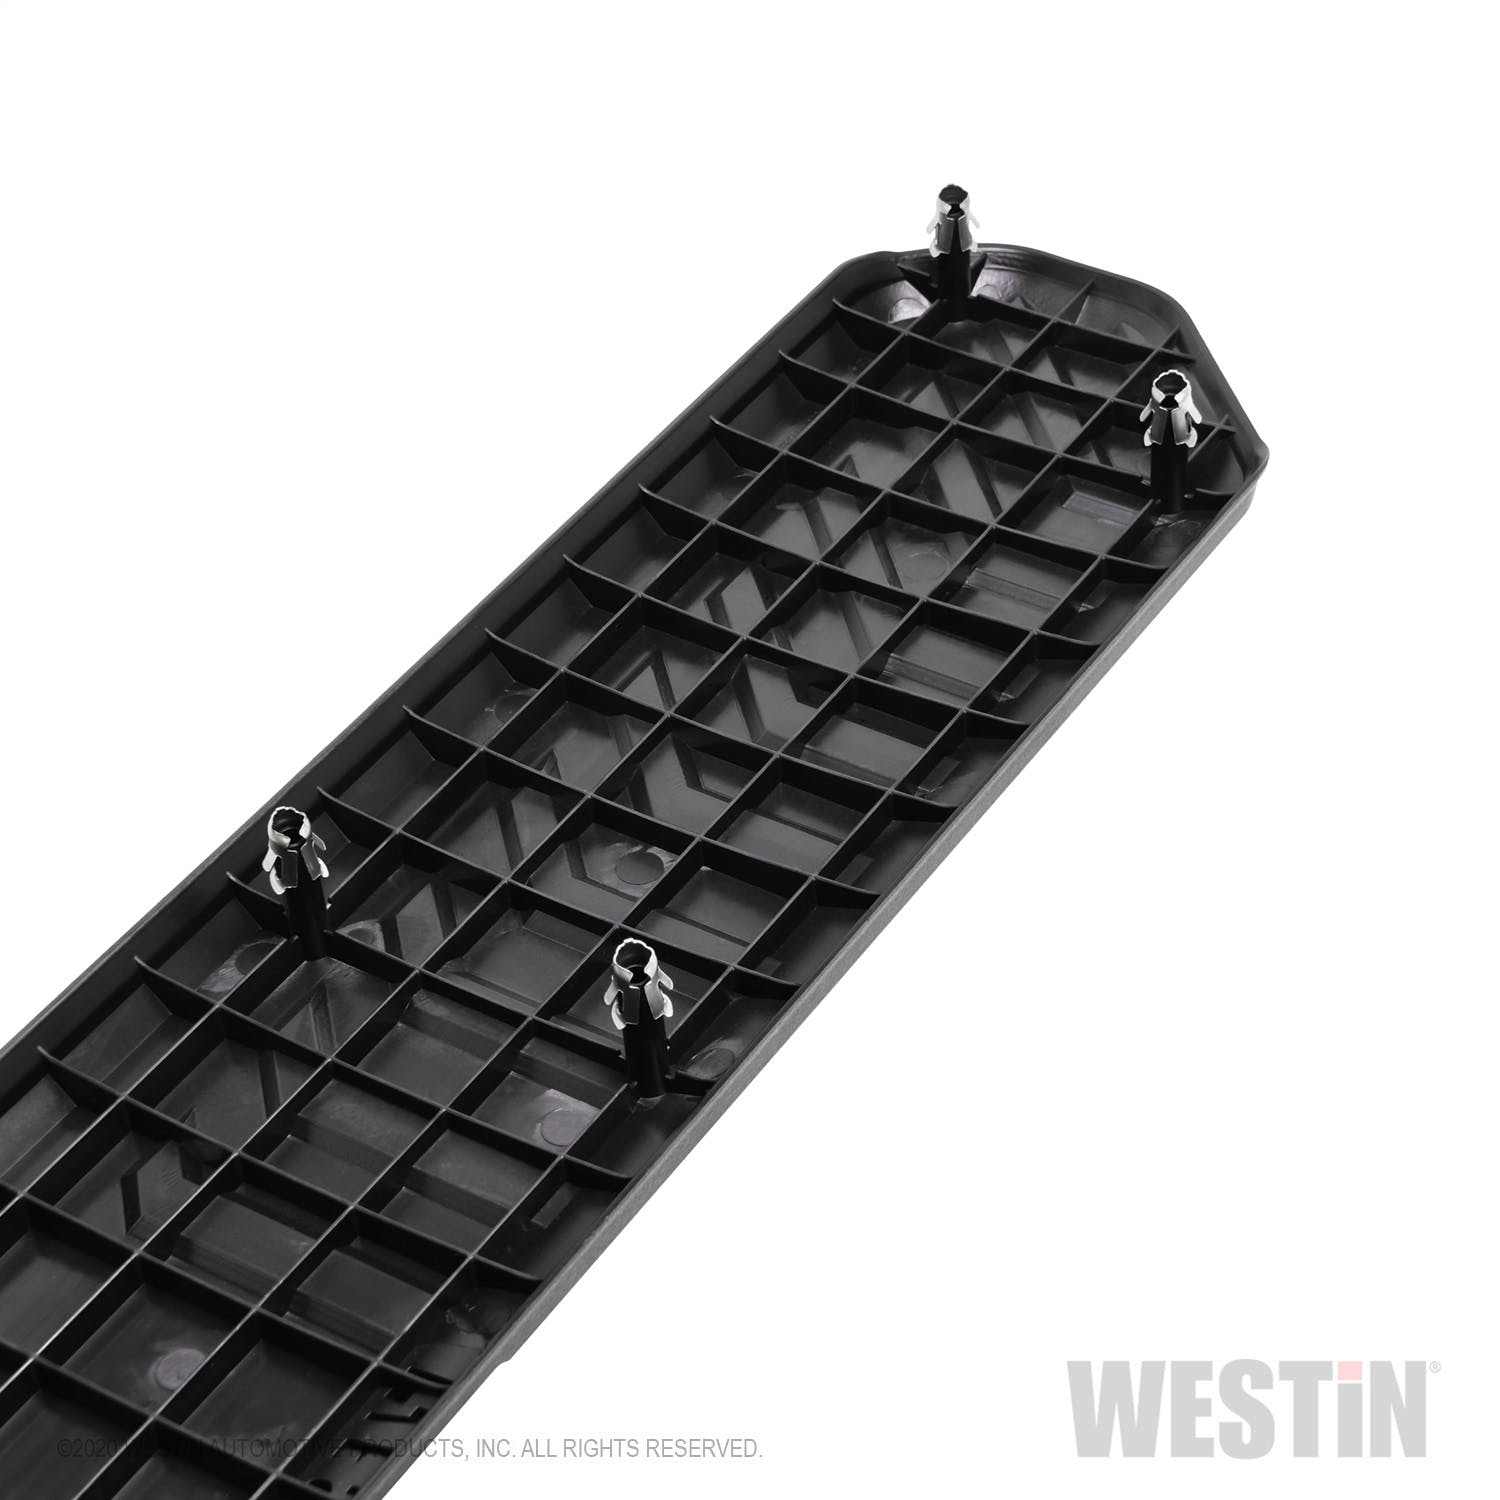 Westin Automotive 28-50001 R5 Nerf Step Bar Pad and Clips Black